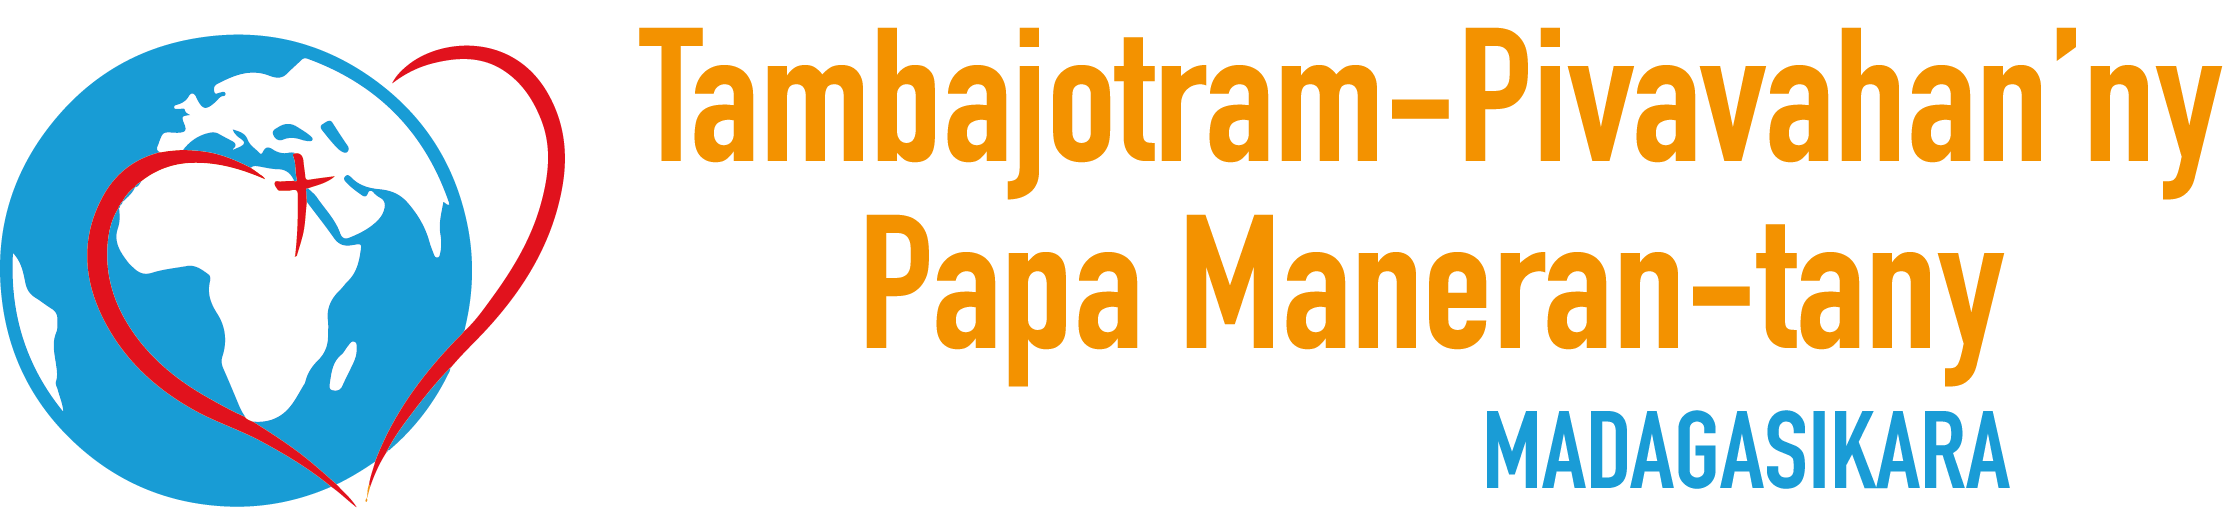 Tambajotram-Pivavahan'ny Papa Maneran-tany - MADAGASIKARA